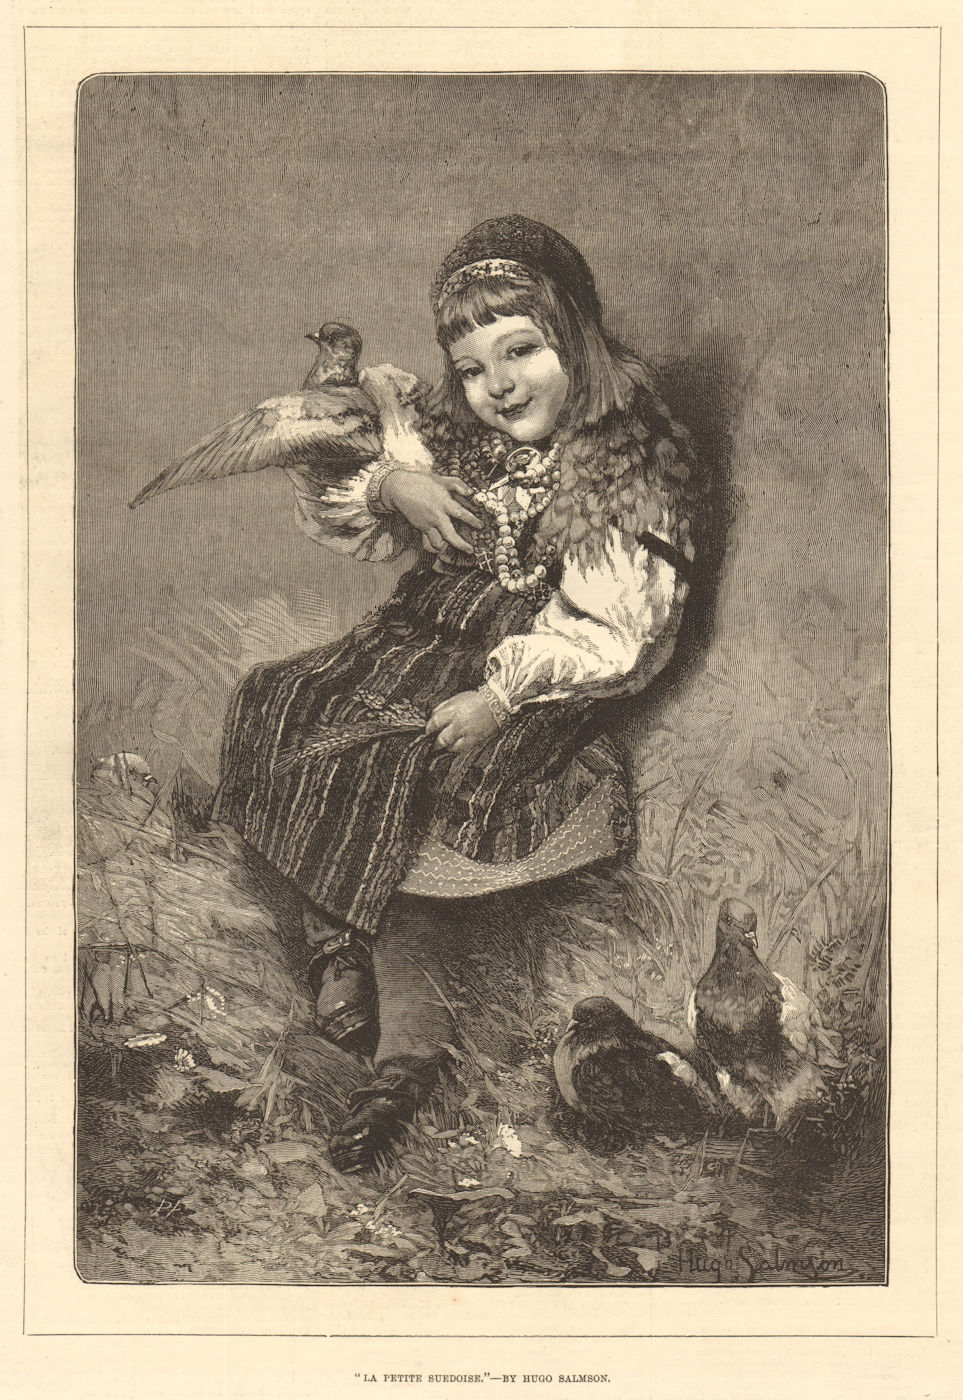 Associate Product " La petite Suedoise " - by Hugo Salmson. Sweden. Pigeons 1875 ILN full page